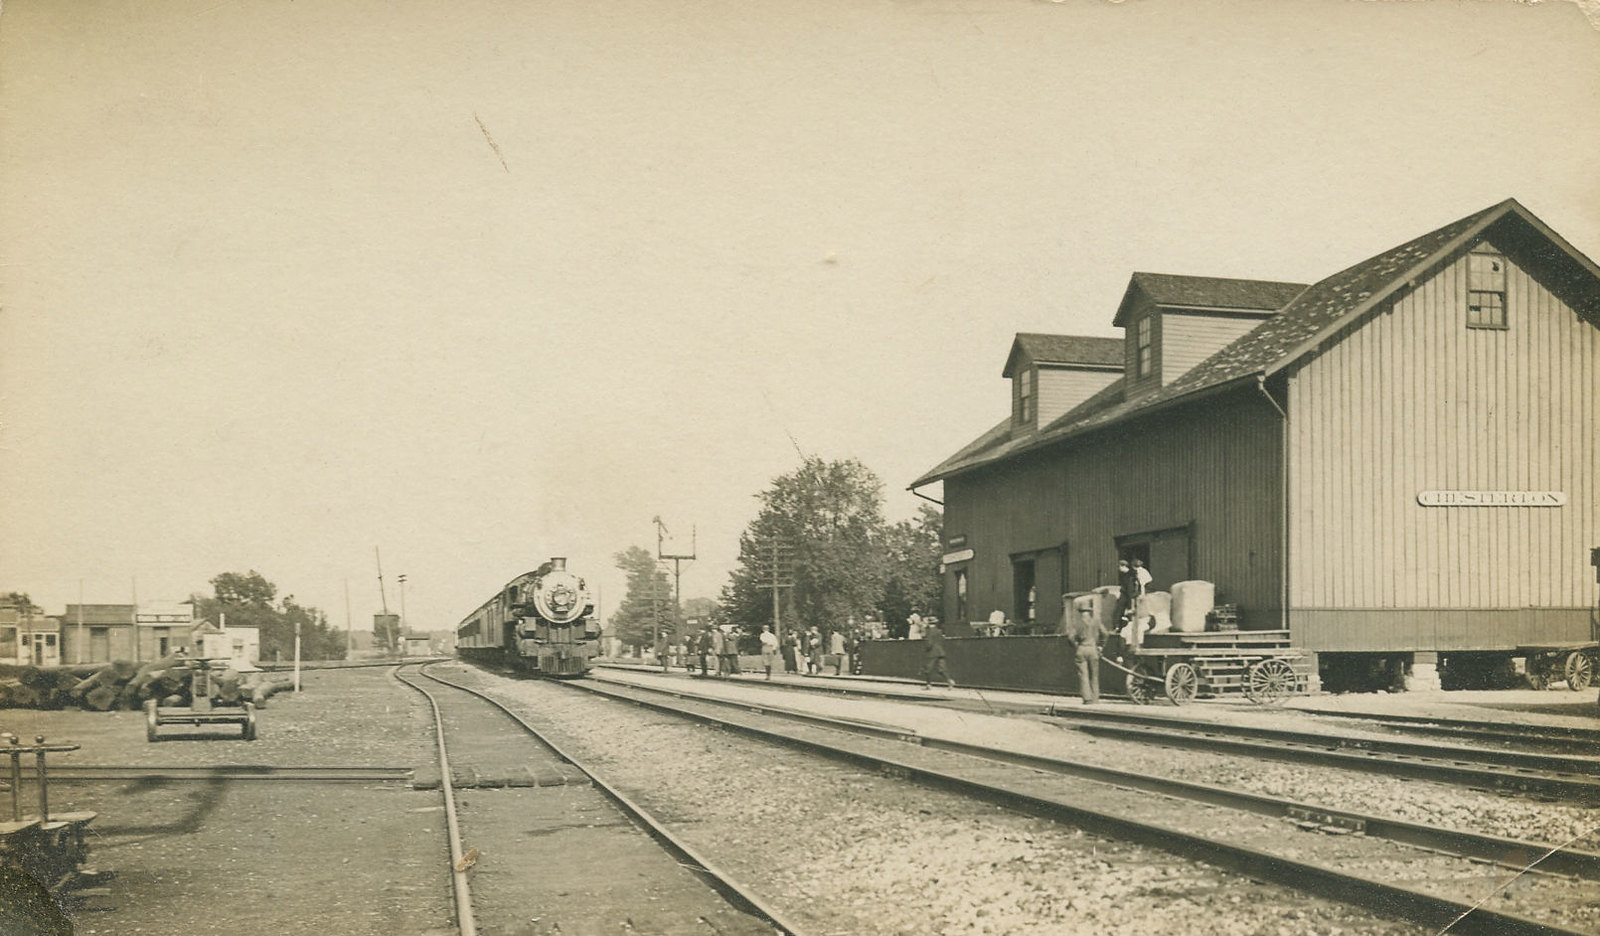 Lake Shore and Michigan Southern Railway Depot, 1912 - Chesterton, Indiana